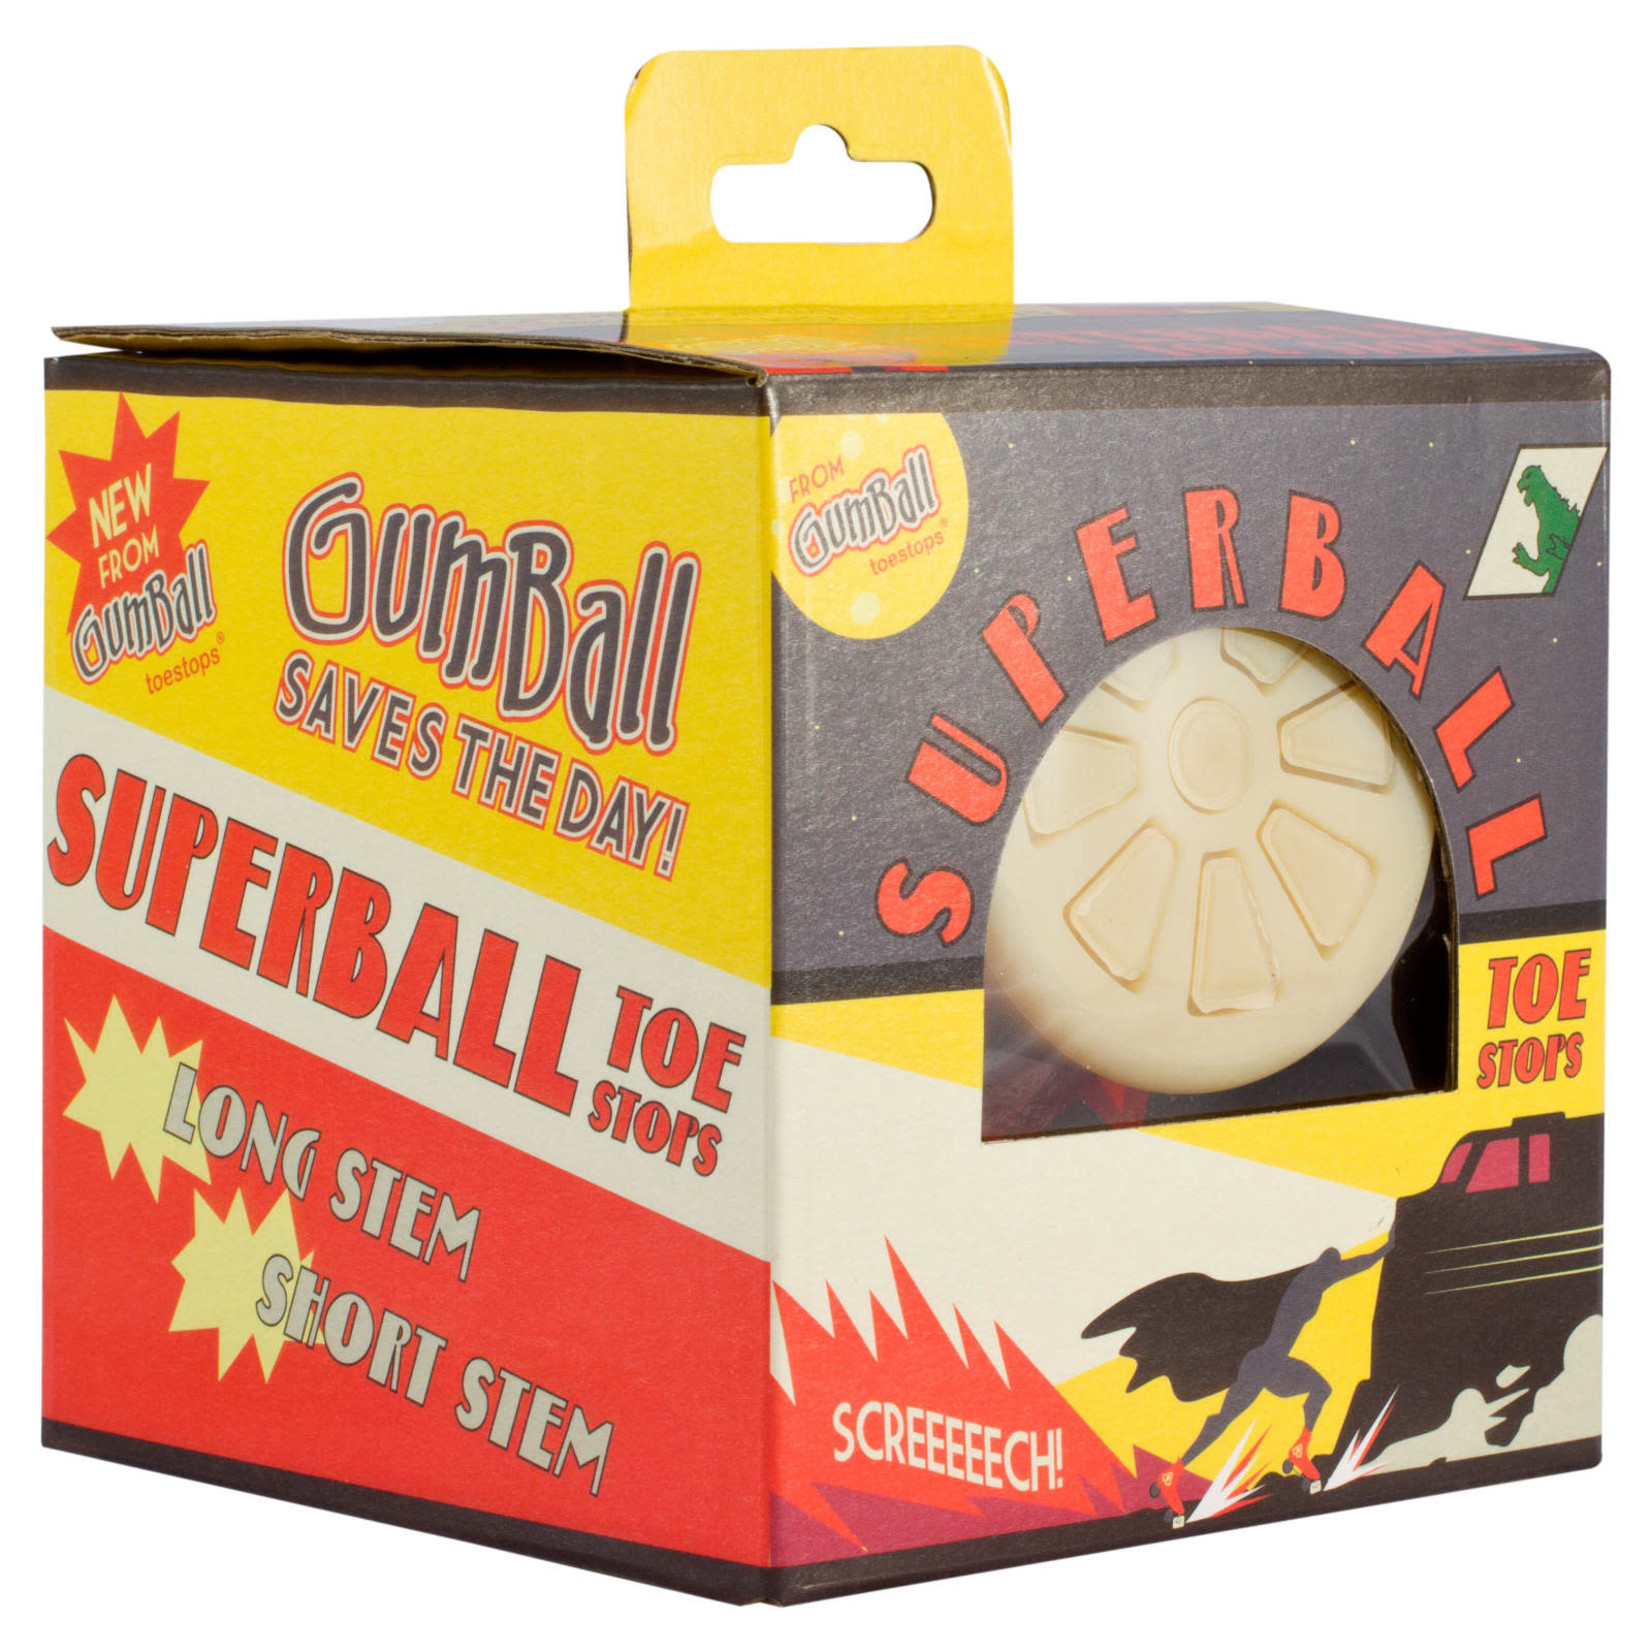 Gumball Superball toestops